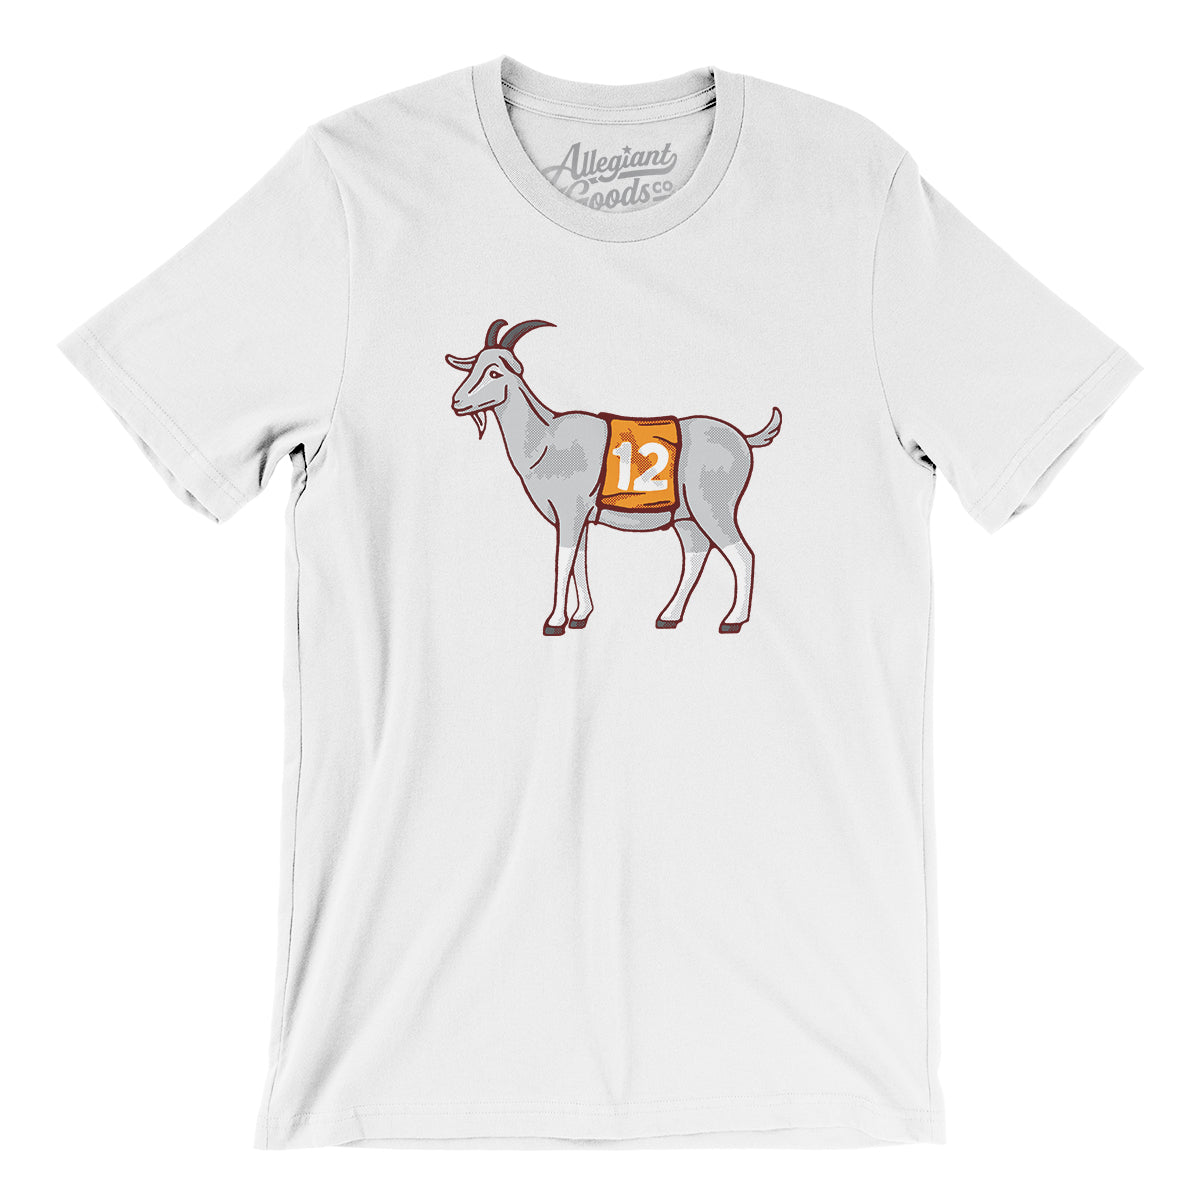 Jordan 12 Super Bowl, The Goat Unisex Shirts